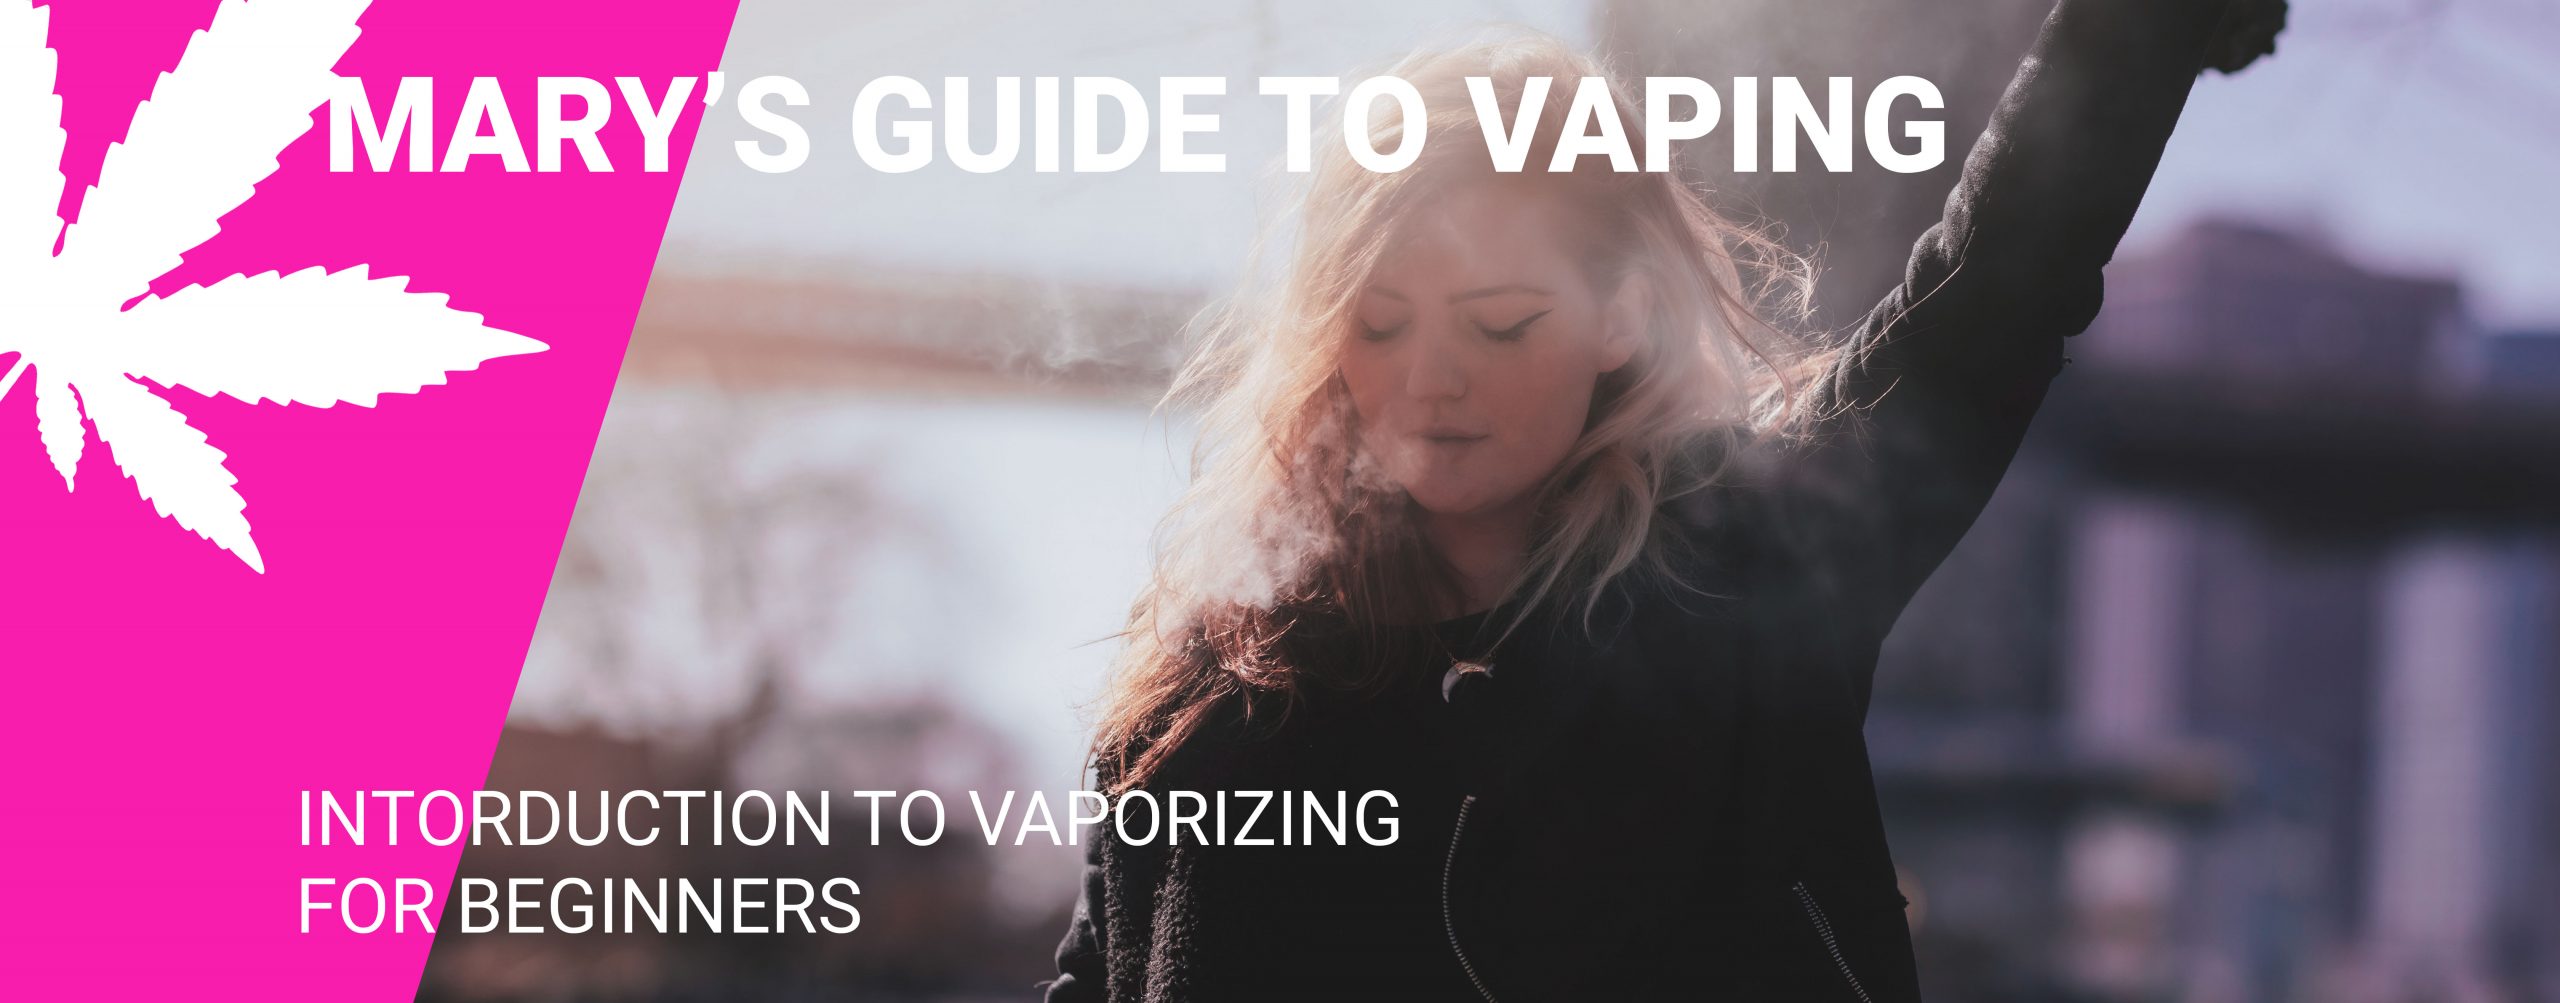 Guide to vaporizing